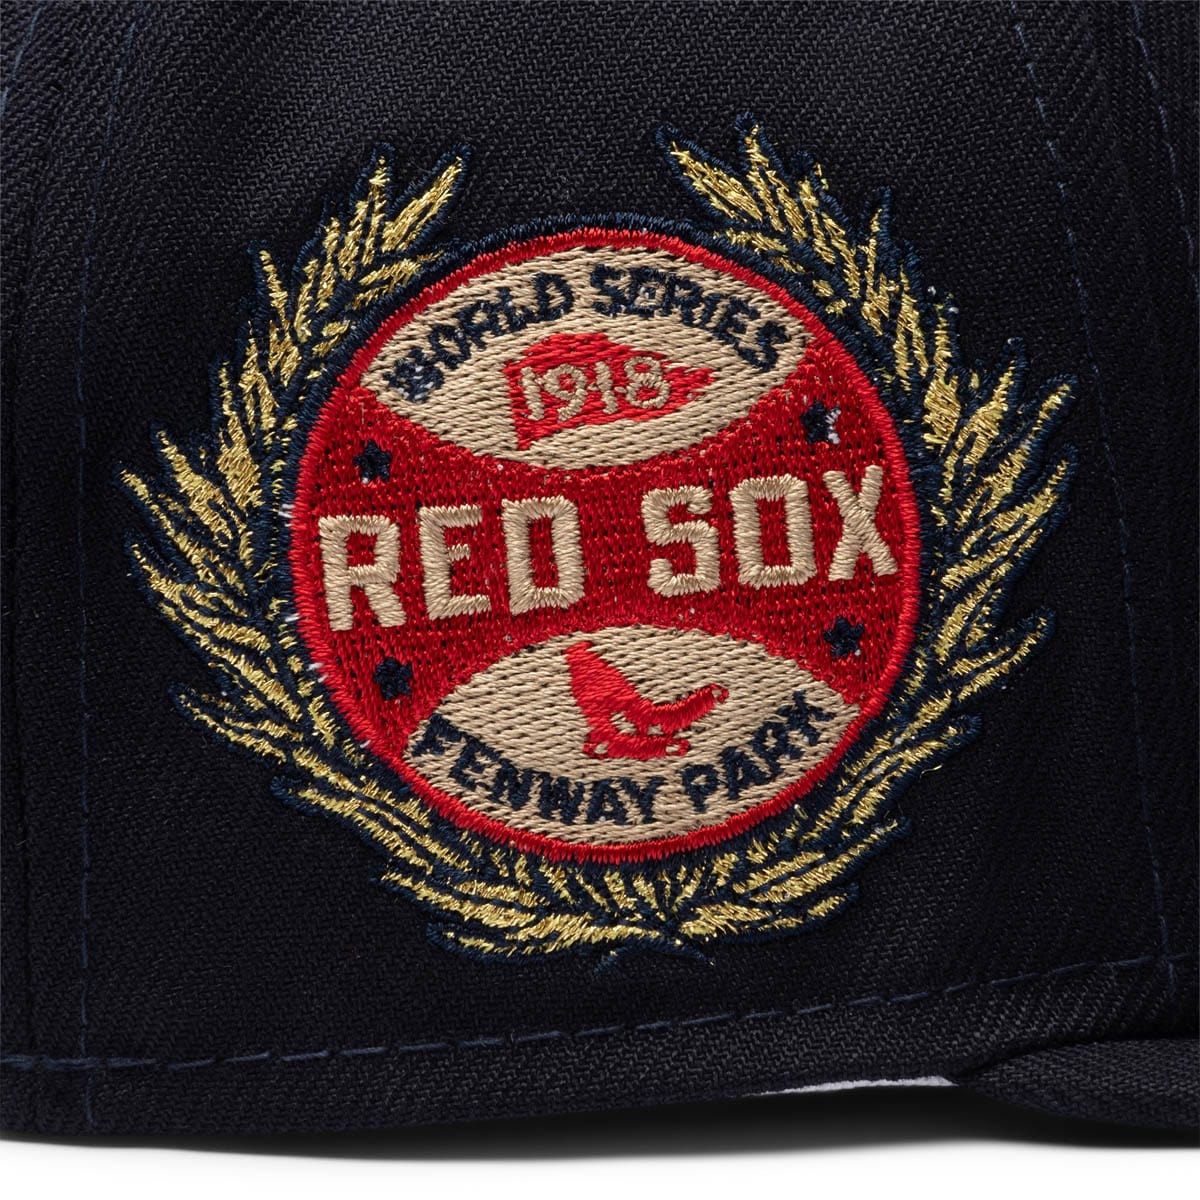 New Era Headwear 59FIFTY BOSTON RED SOX LAUREL FITTED CAP